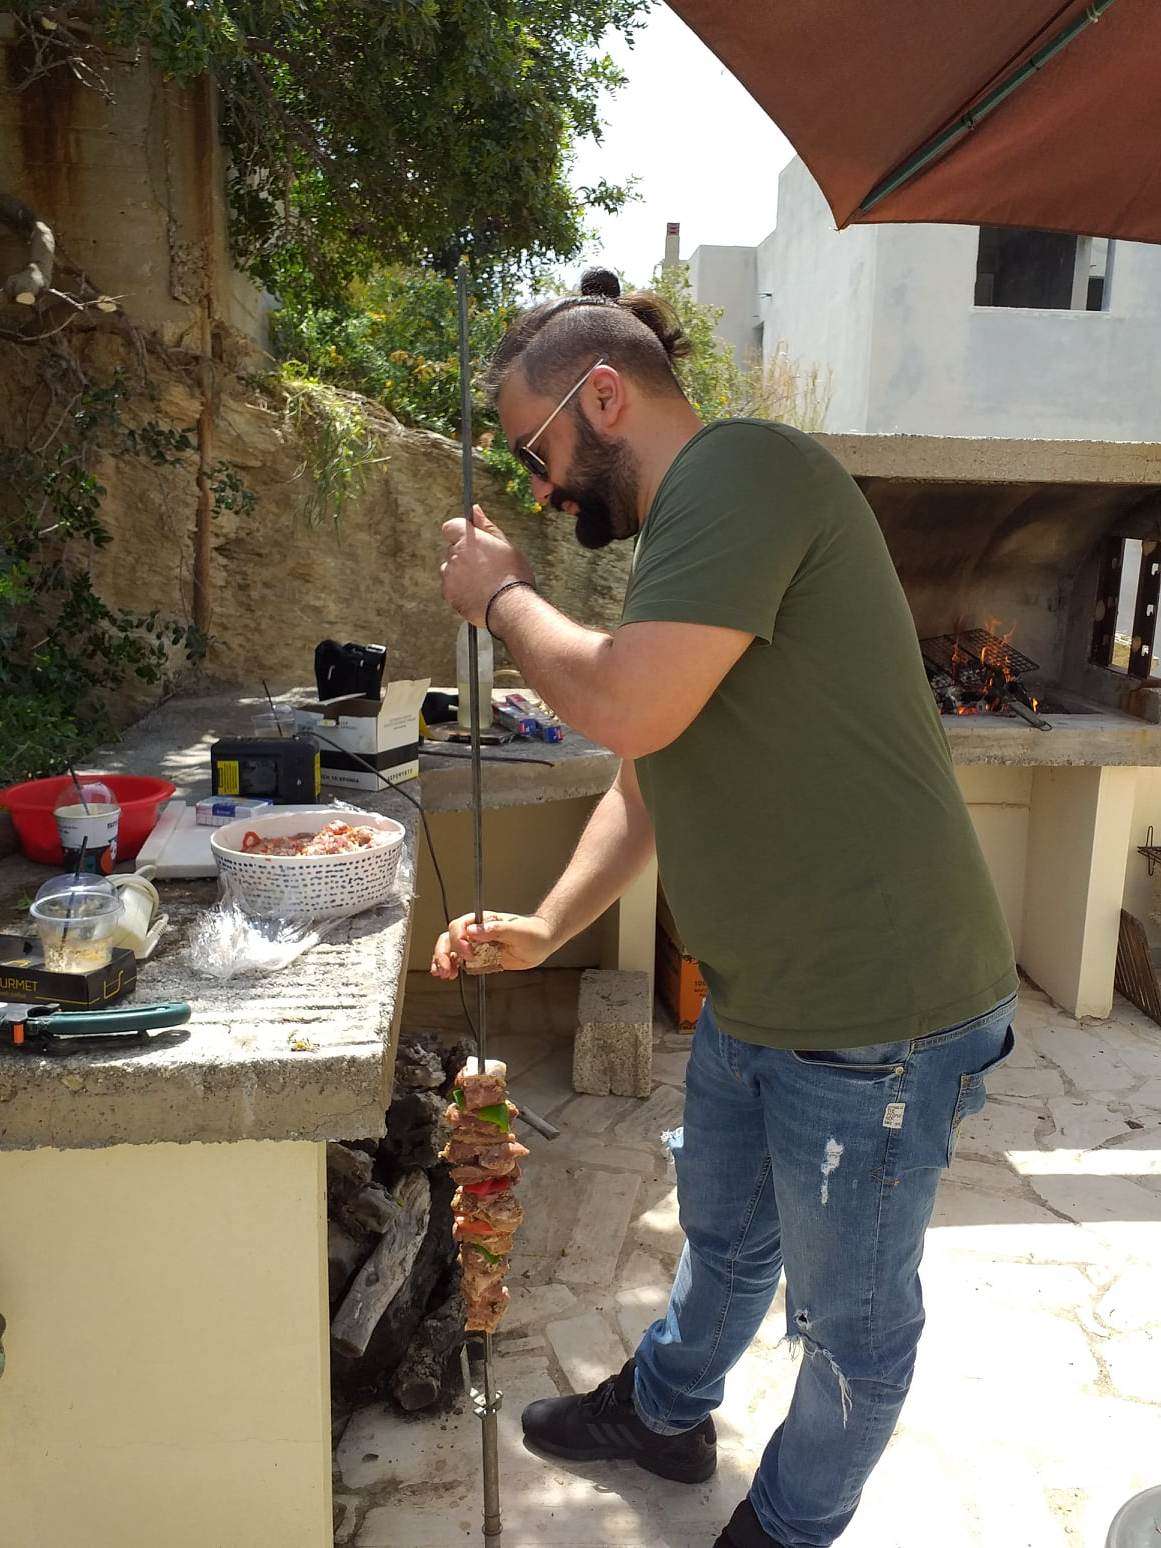 Chef préparant du kontosouvli xoirino au barbecue